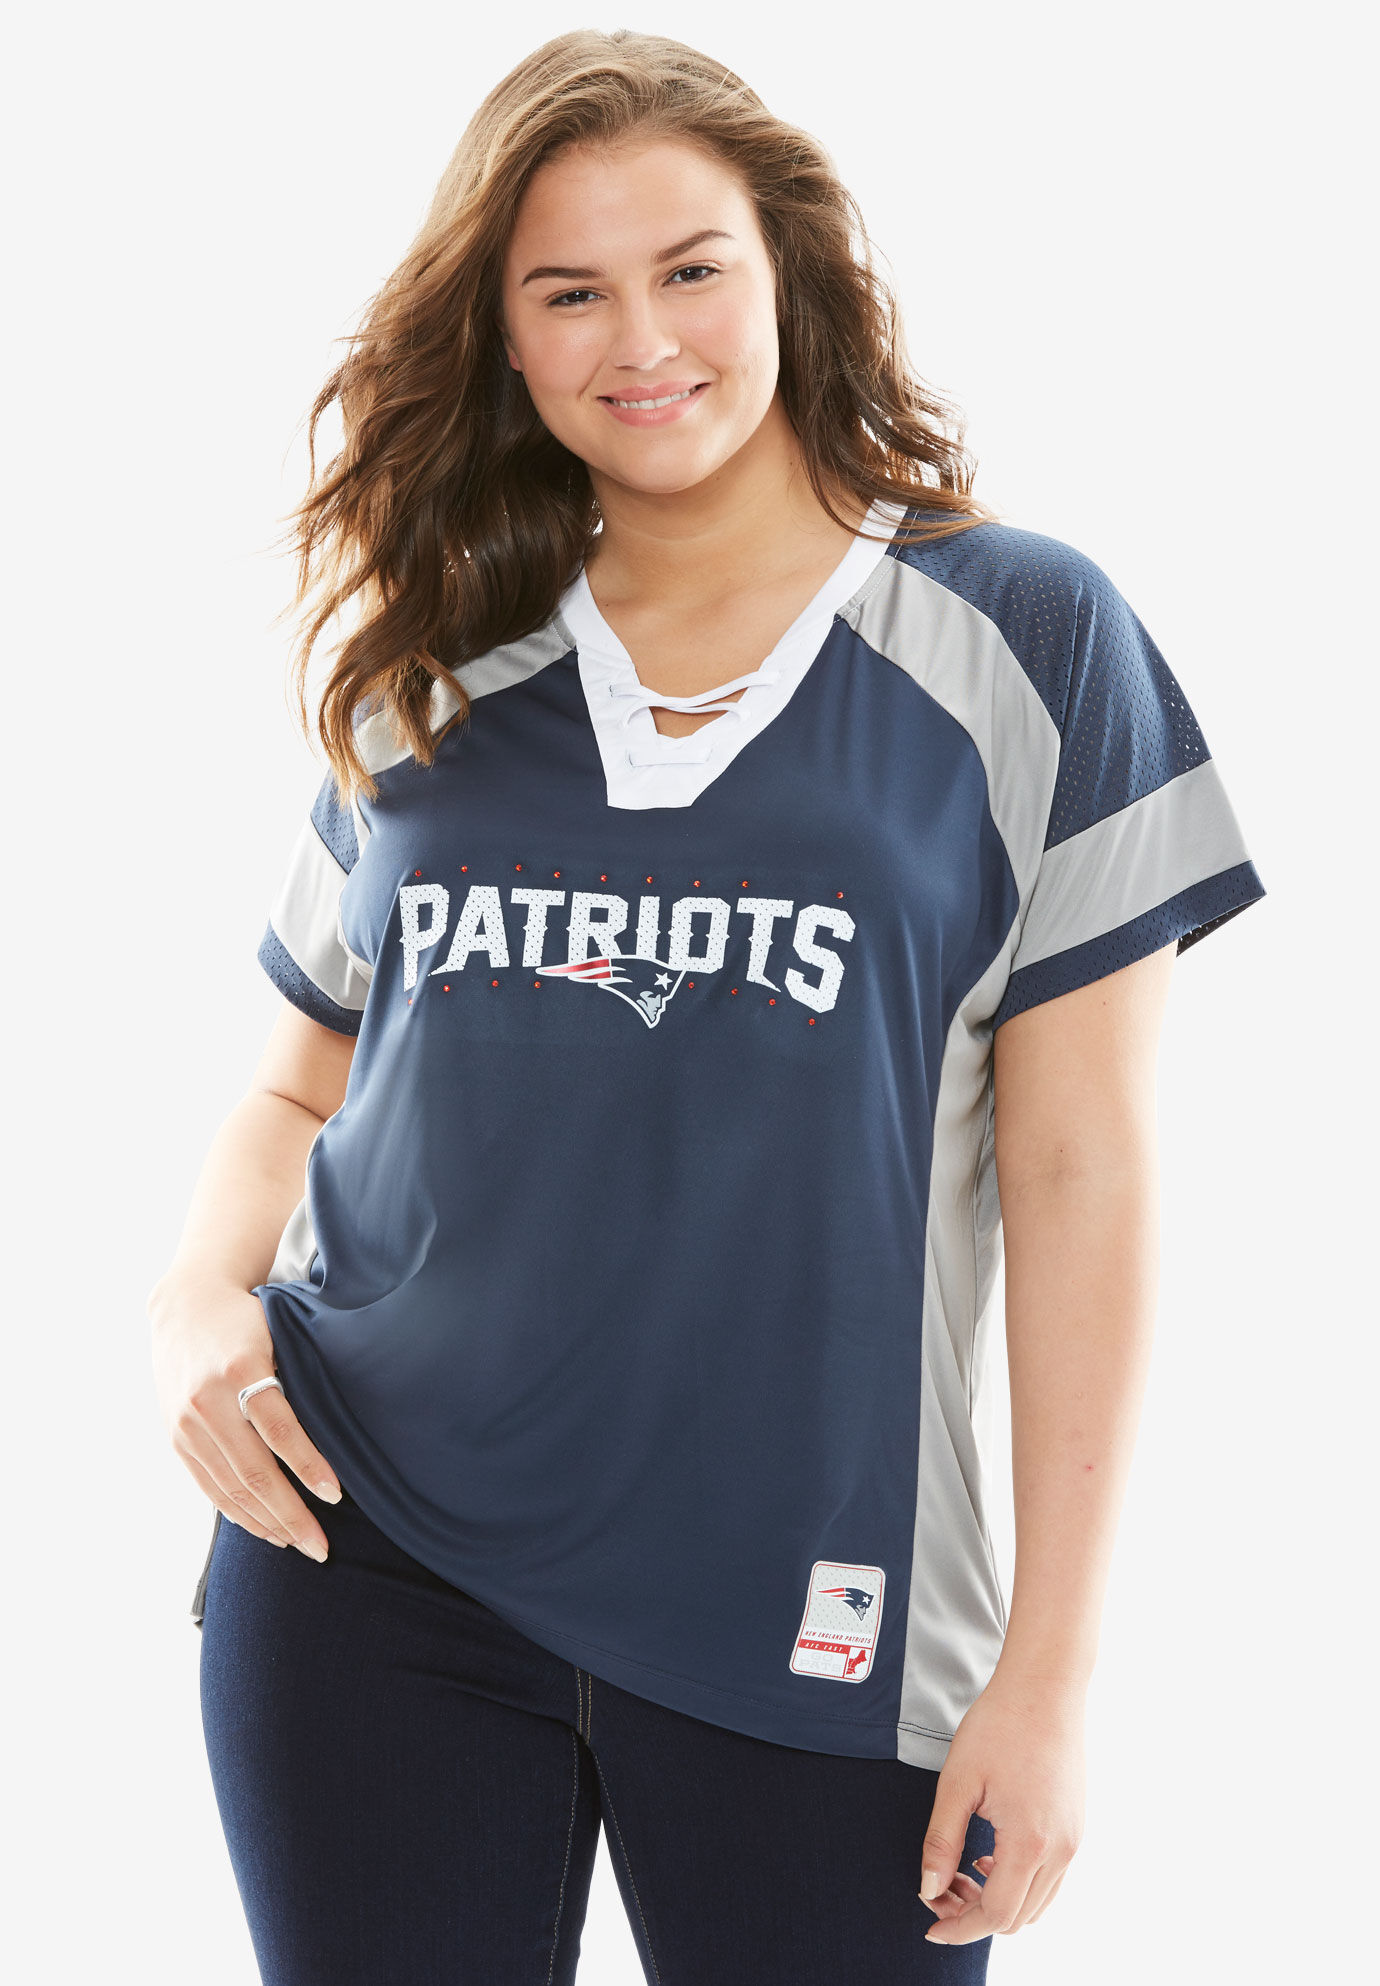 مكيف وستنجهاوس  شباك Plus Size NFL Jerseys & Apparel for Women | Woman Within مكيف وستنجهاوس  شباك